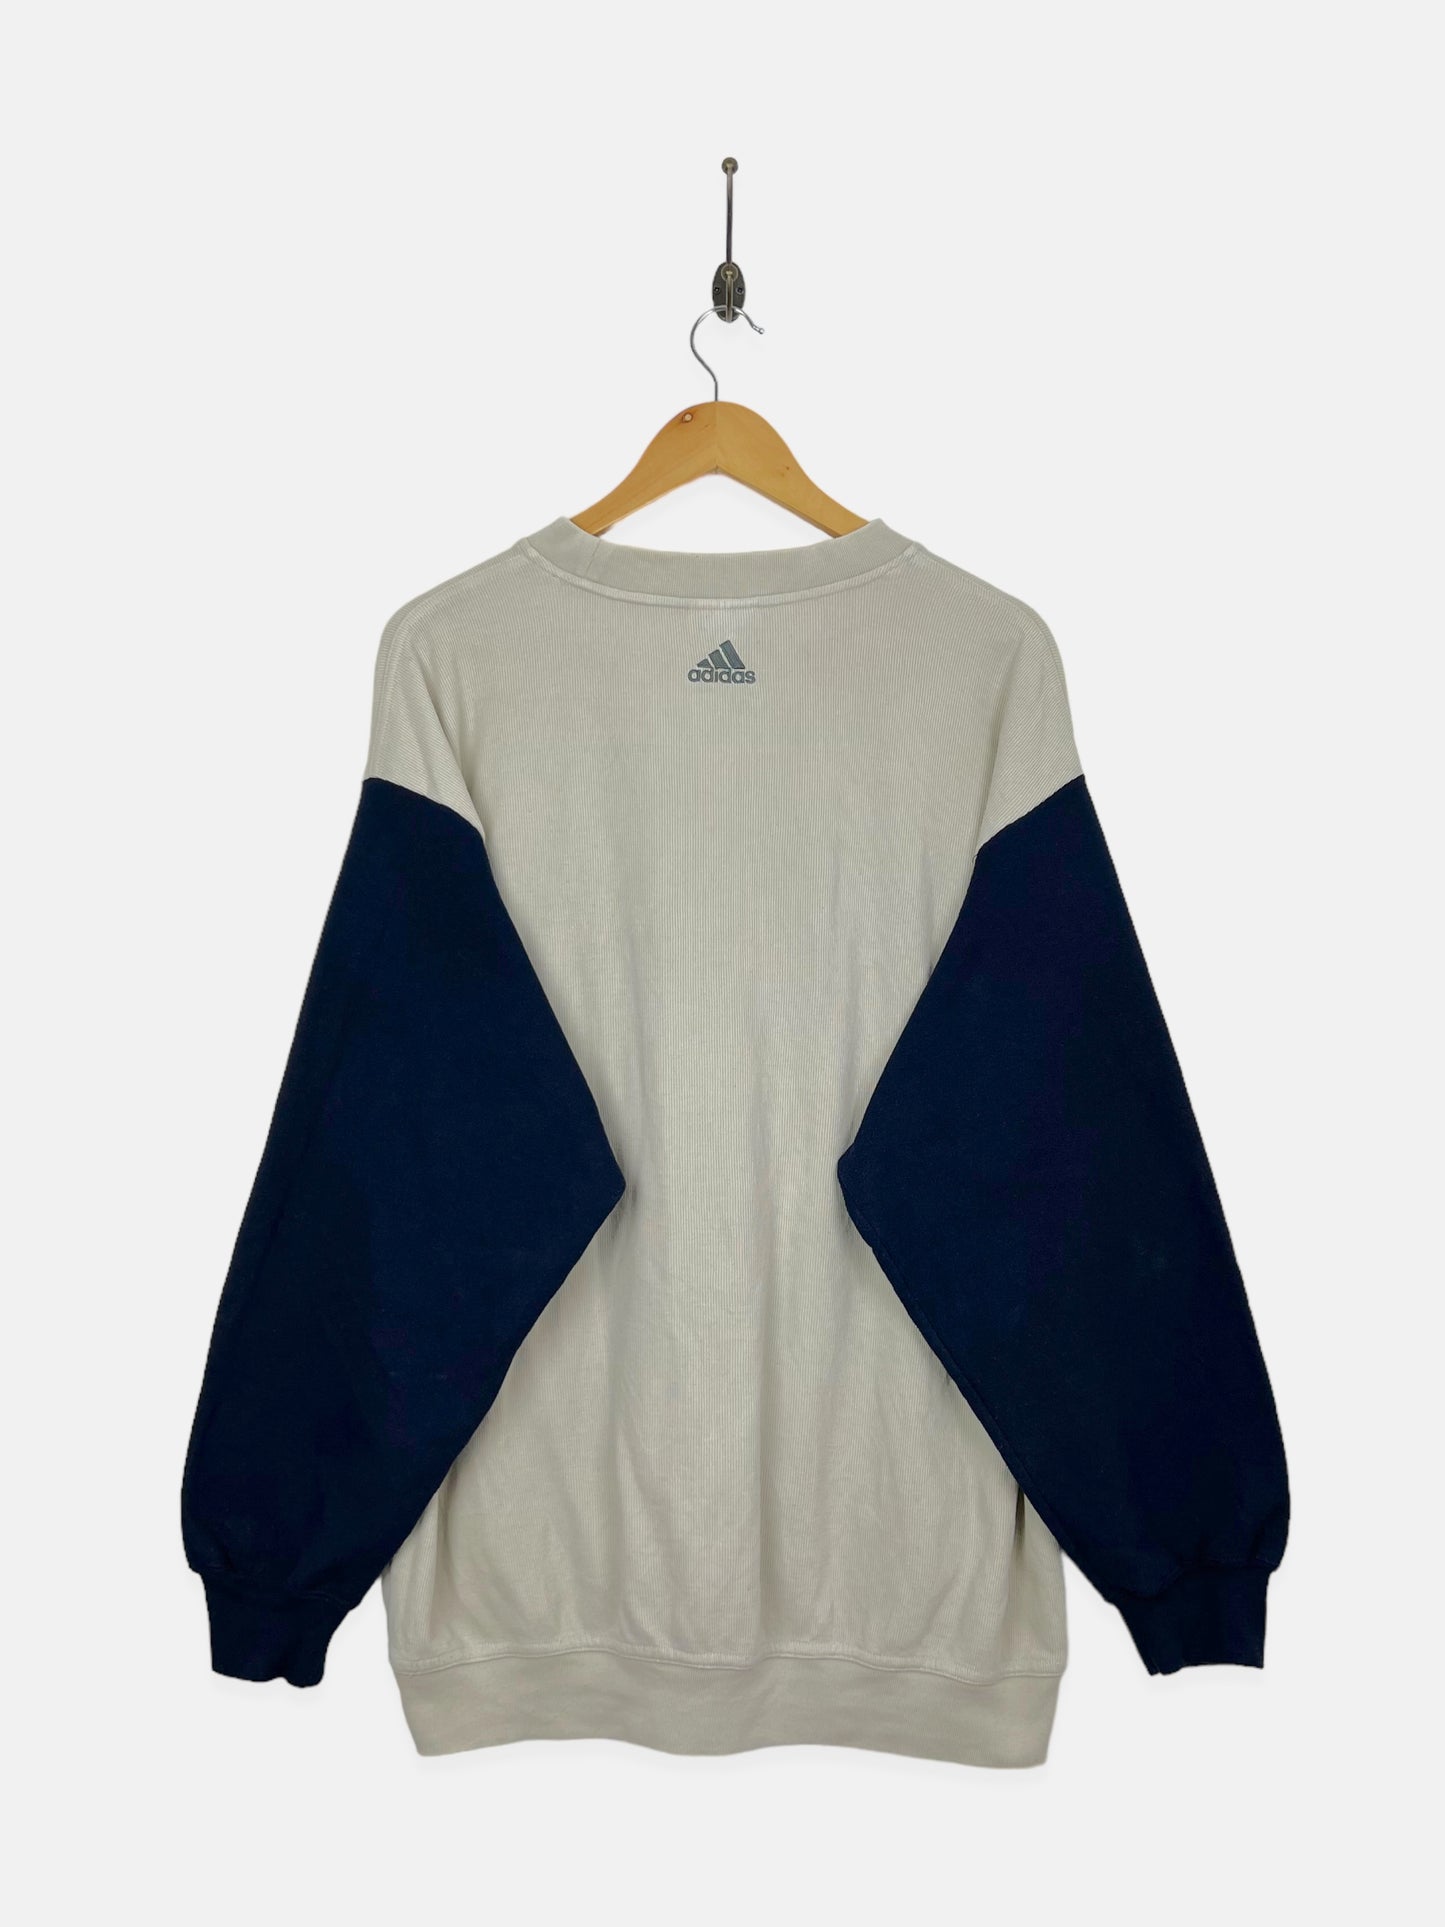 90's Adidas Embroidered Vintage Light Sweatshirt Size XL